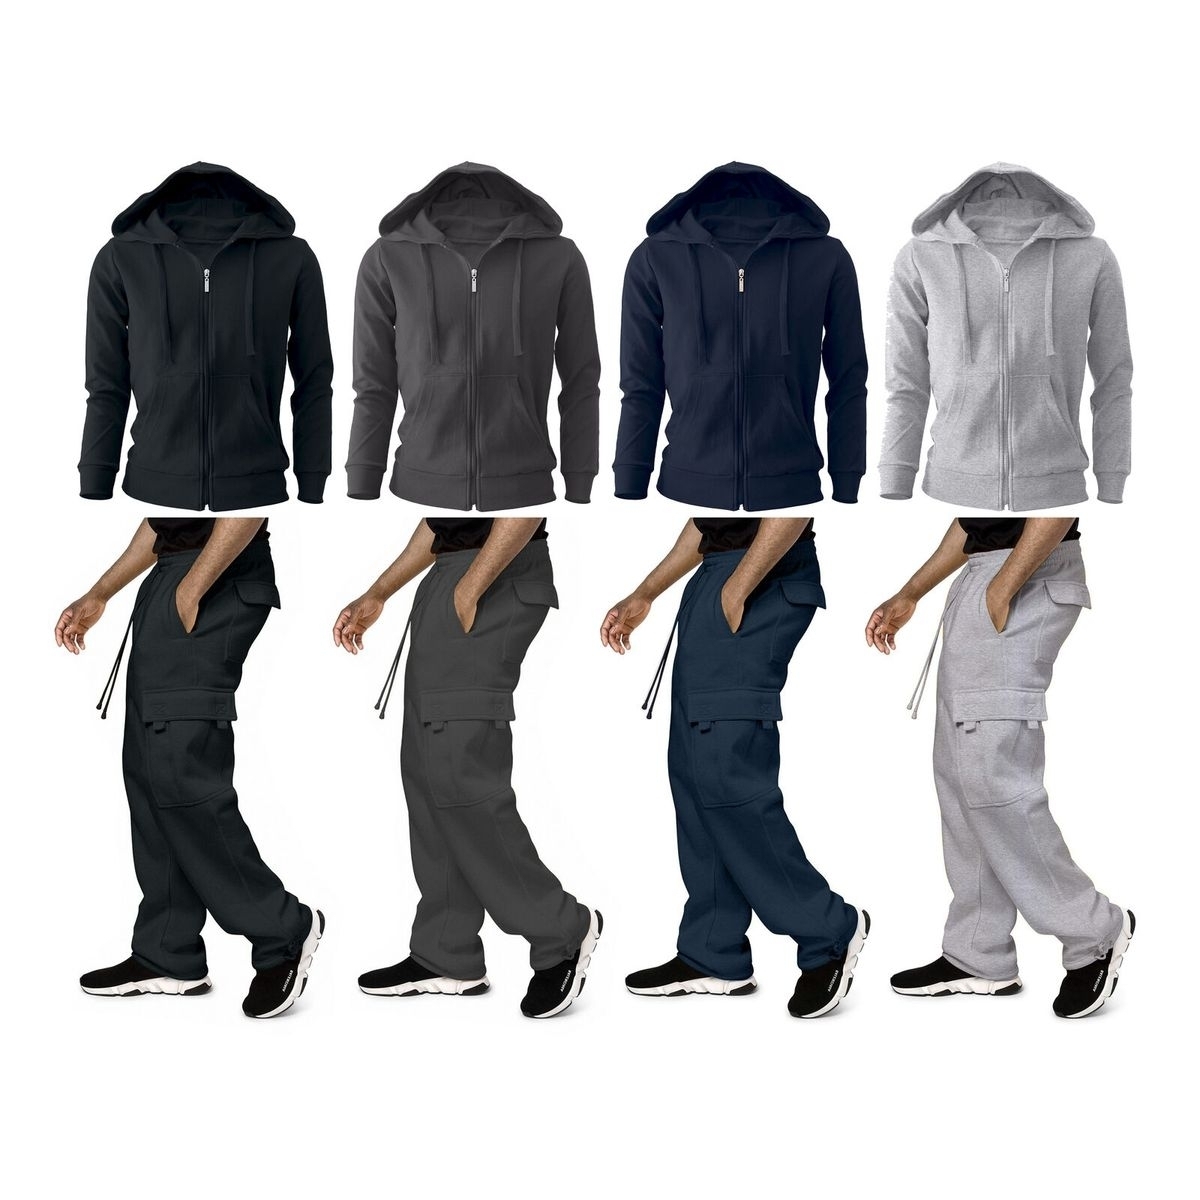 Men's Big & Tall Winter Warm Athletic Active Cozy Fleece Lined Multi-Pocket Full Zip Up Cargo Tracksuit - Charcoal, Medium